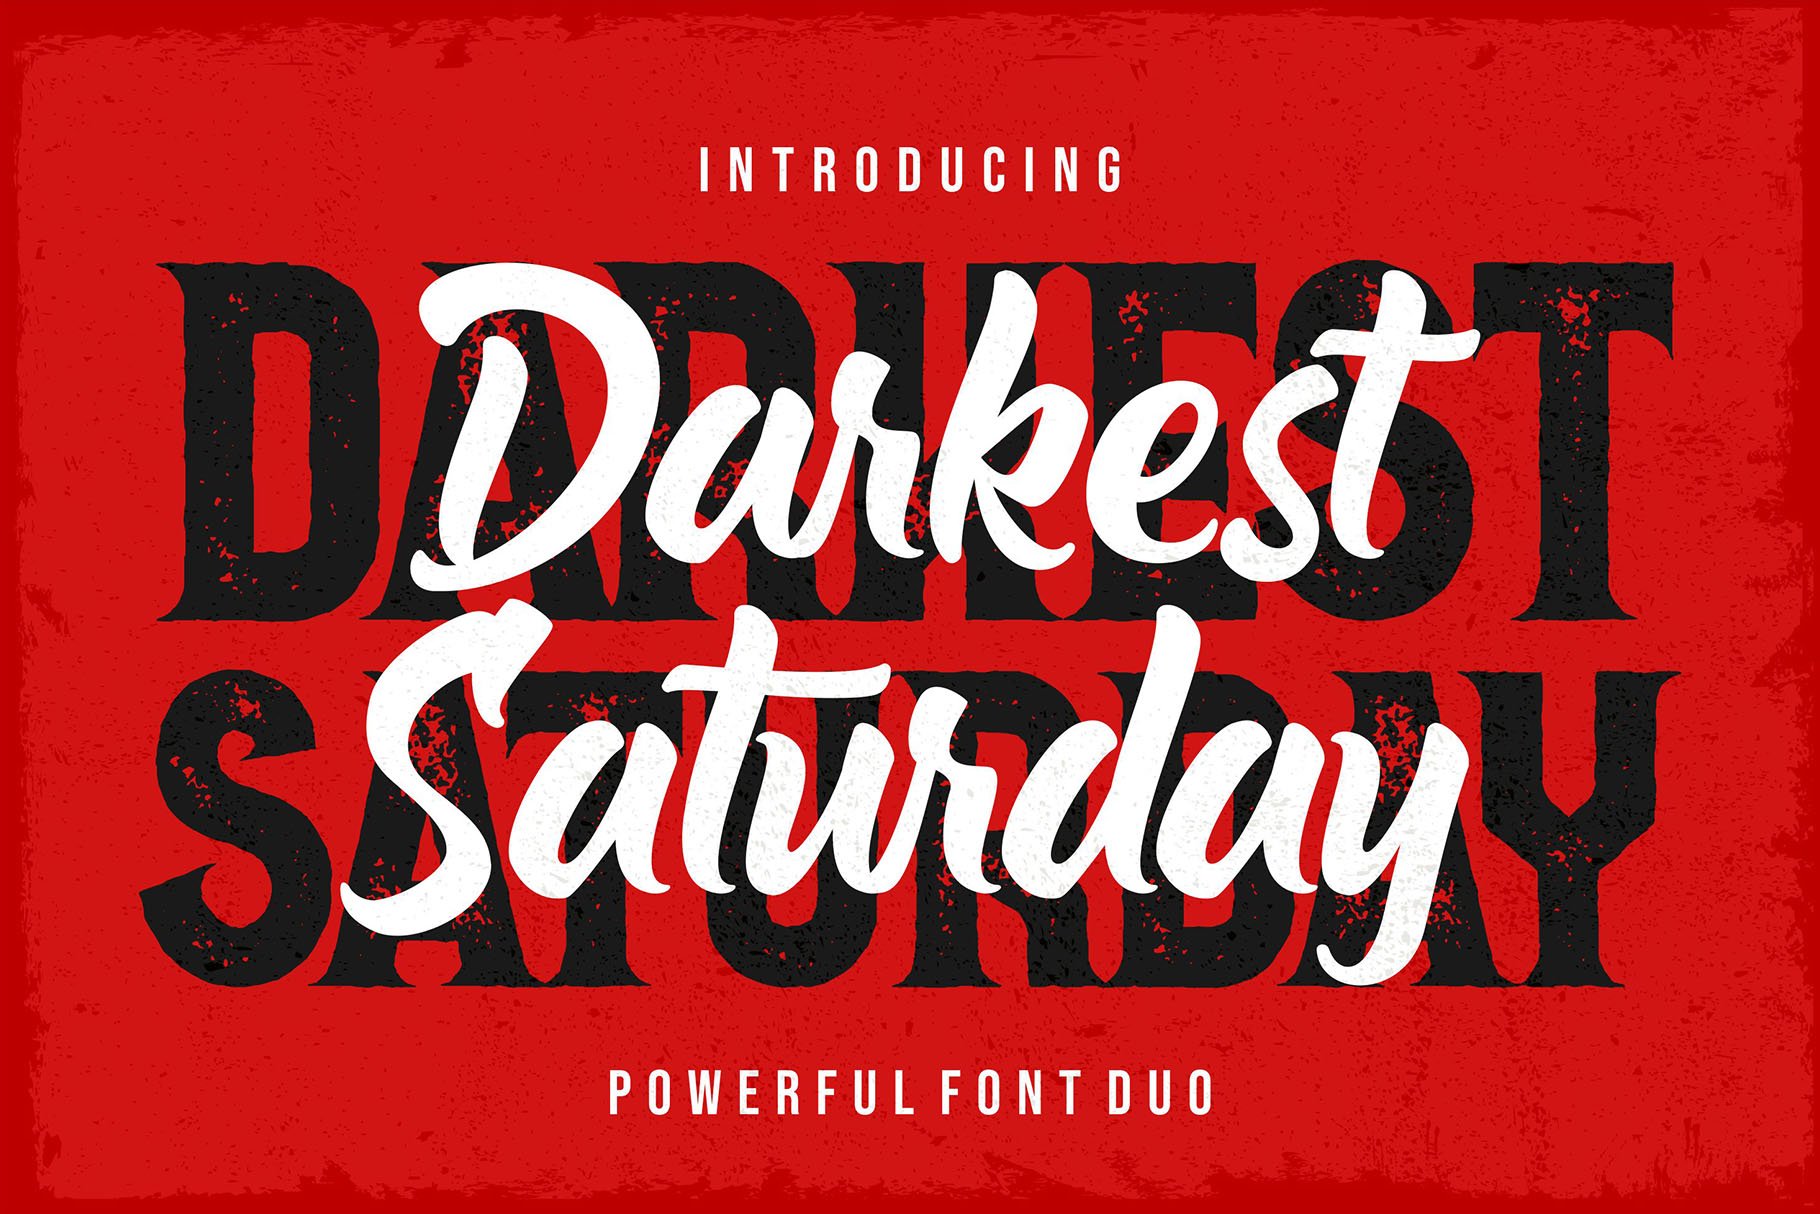 Darkest Saturday Duo cover image.